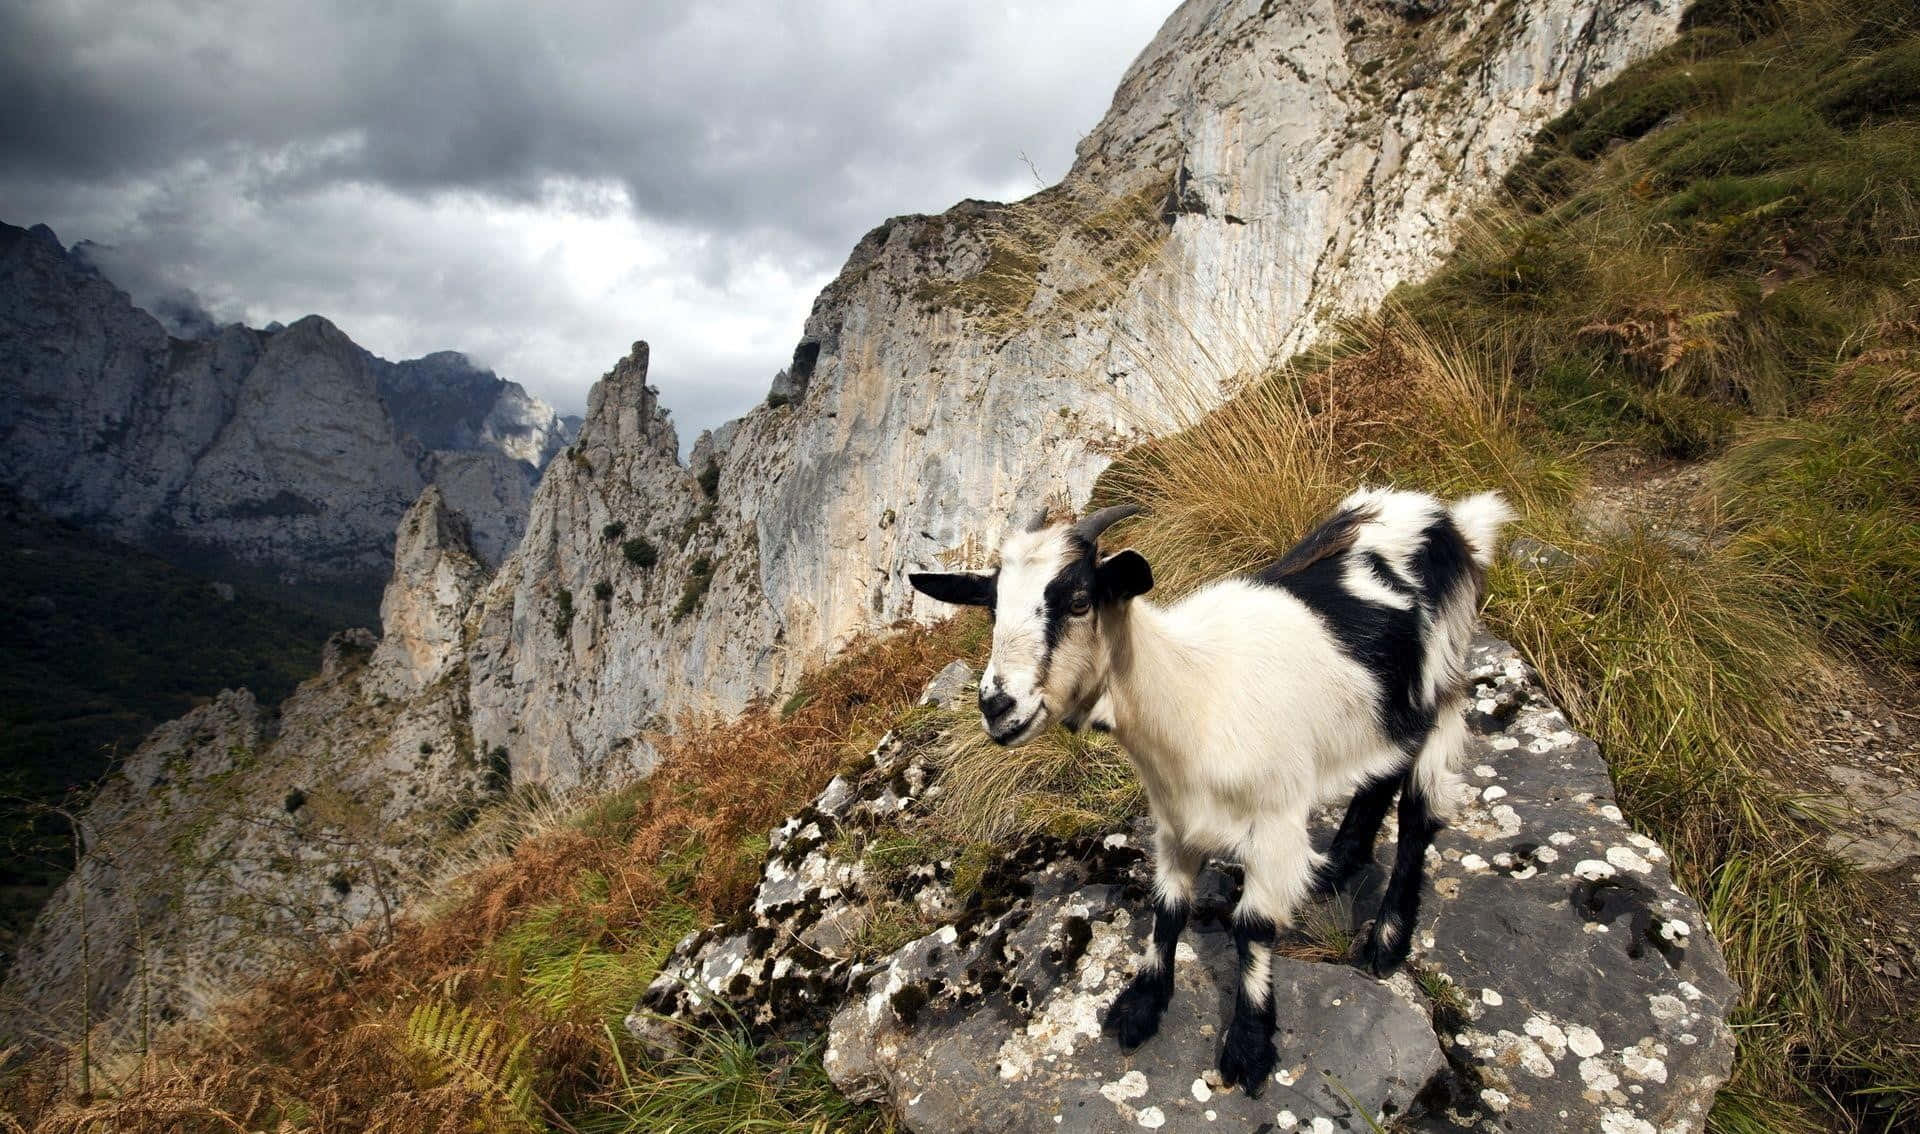 A graceful mountain goat surveys a stunning landscape